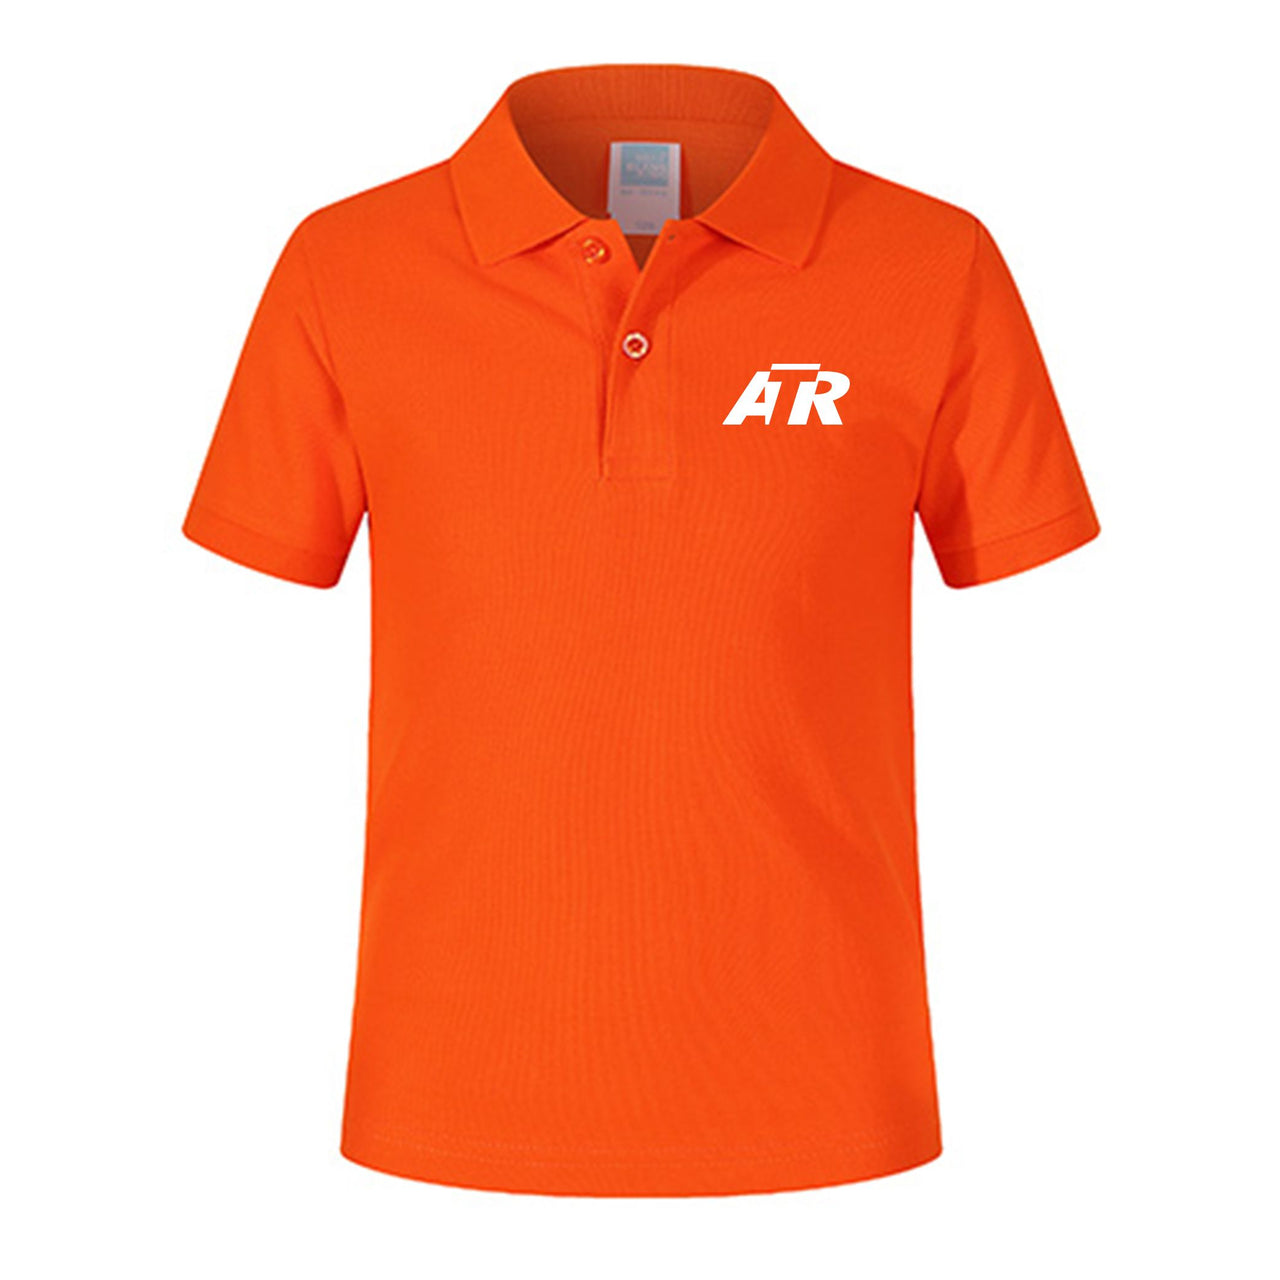 ATR & Text Designed Children Polo T-Shirts